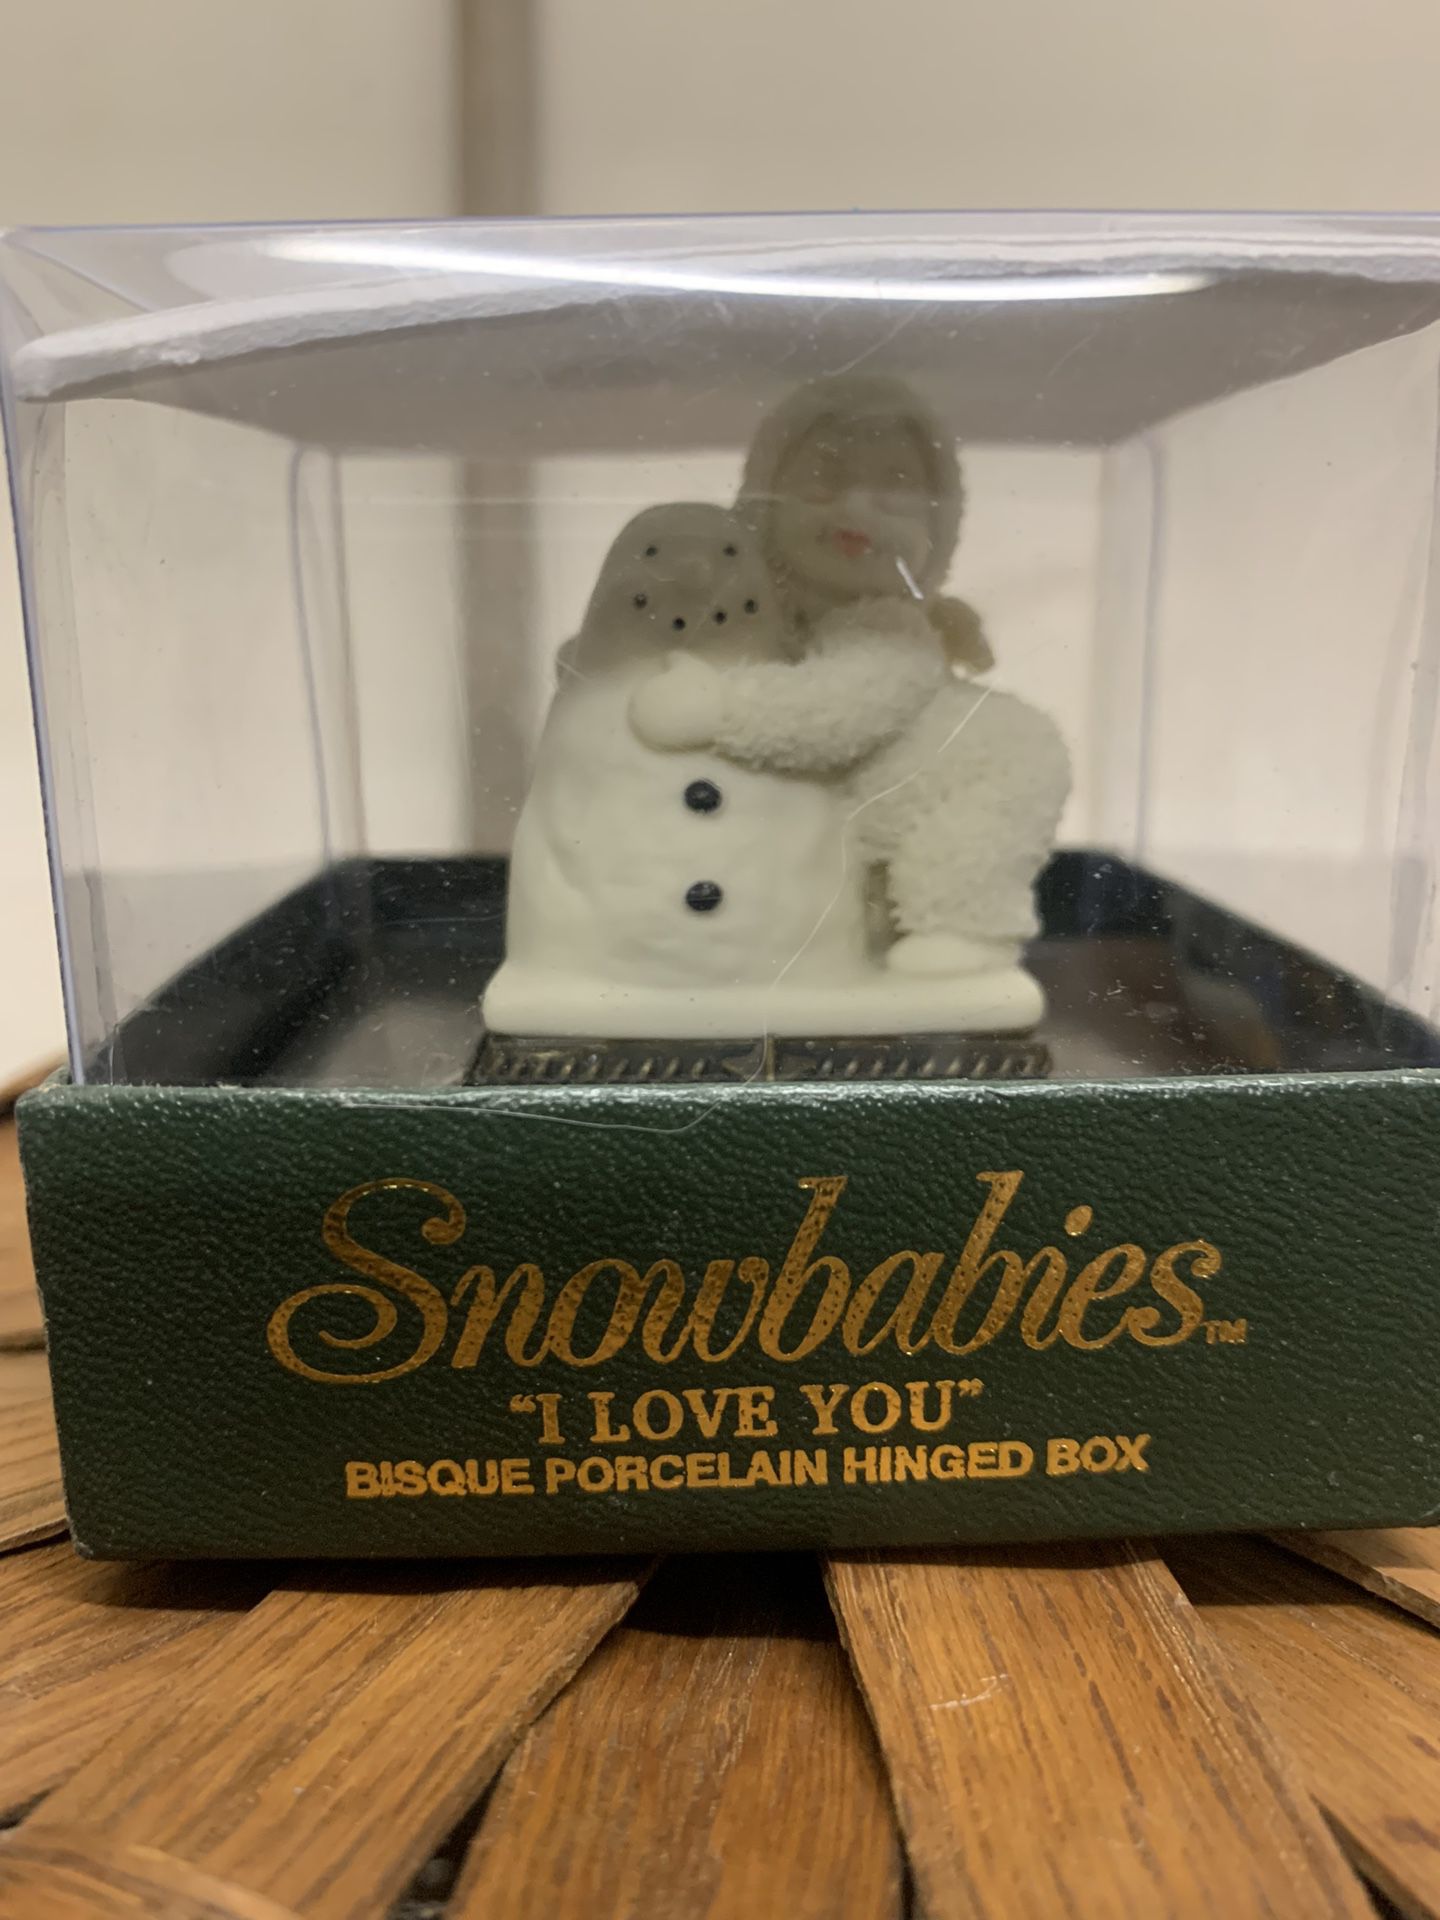 Snowbabies “I Love You” Bisque Porcelain Hinged Trinket Box